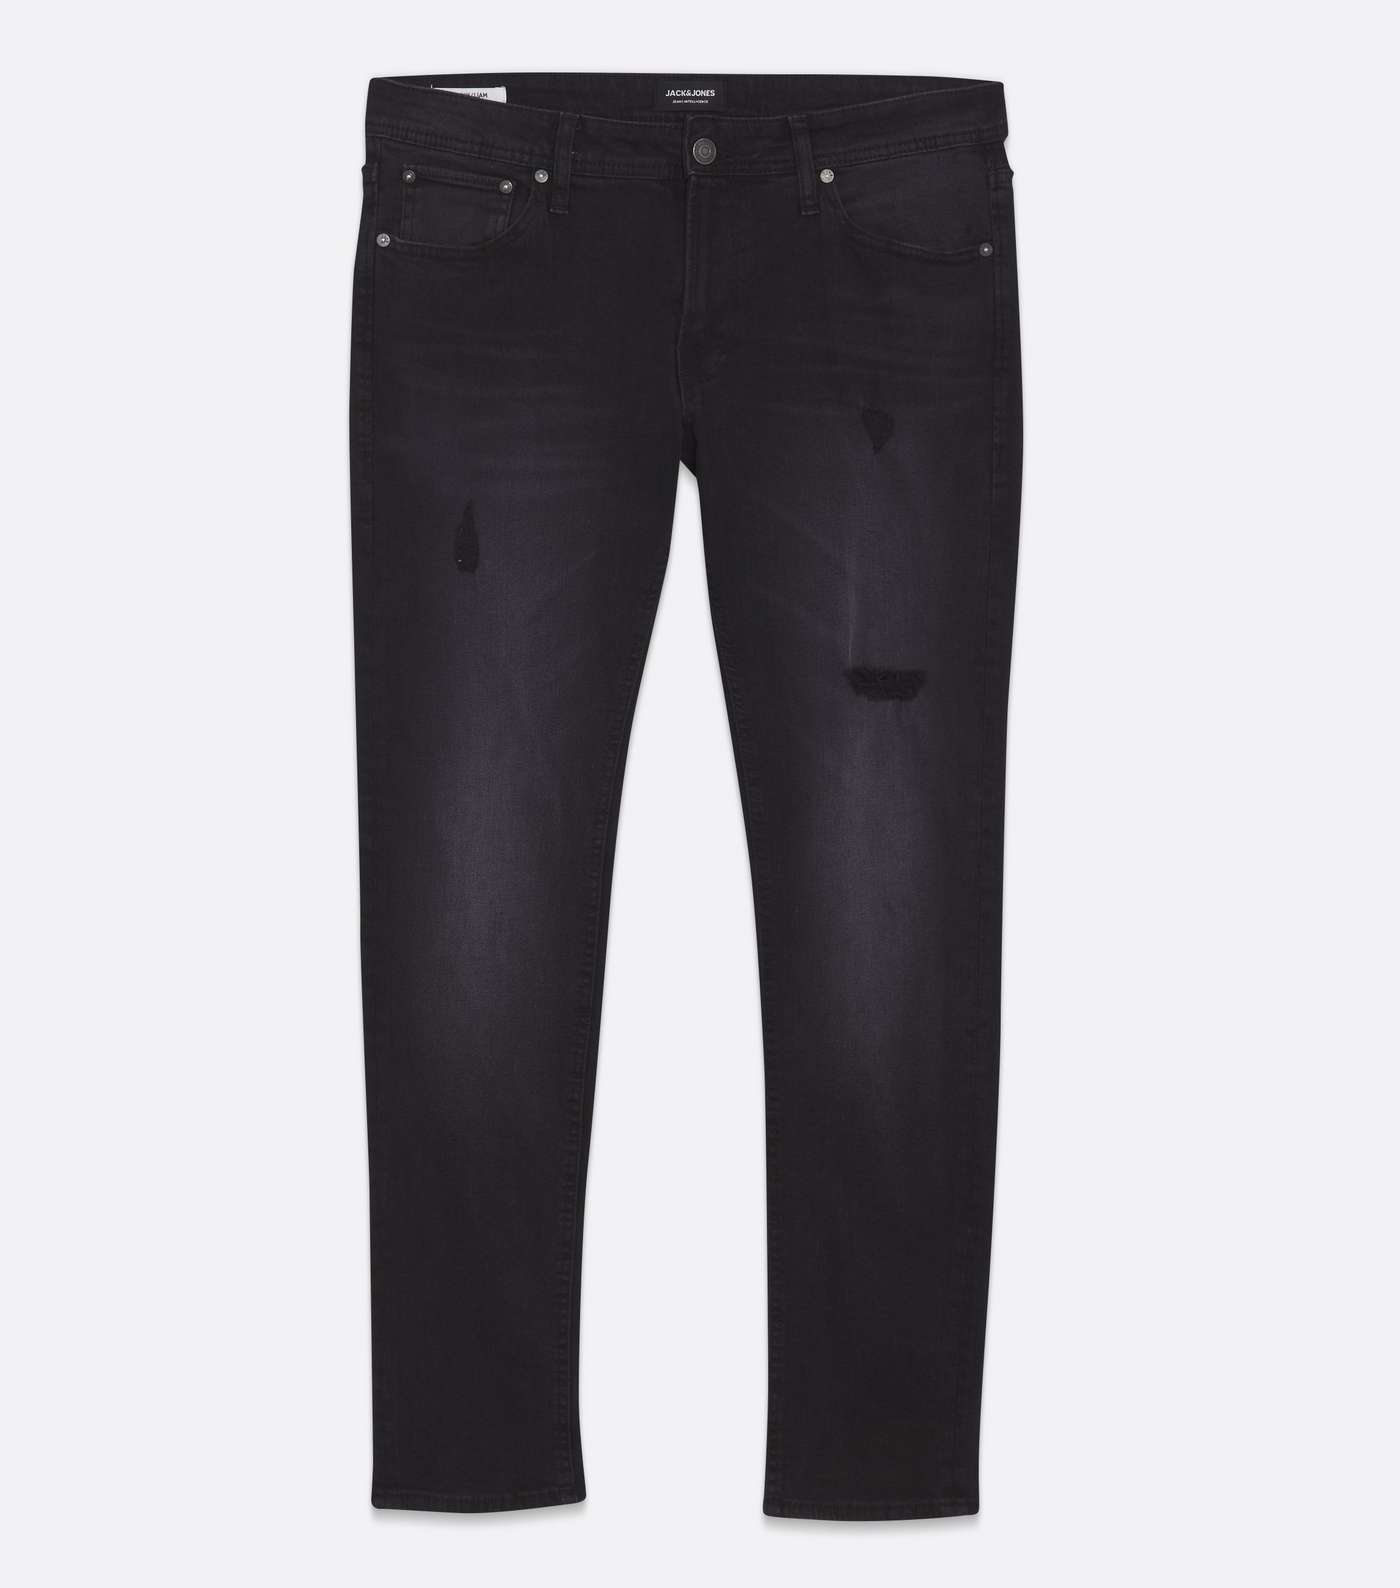 Jack & Jones Black Dark Wash Ripped Skinny Jeans Image 5